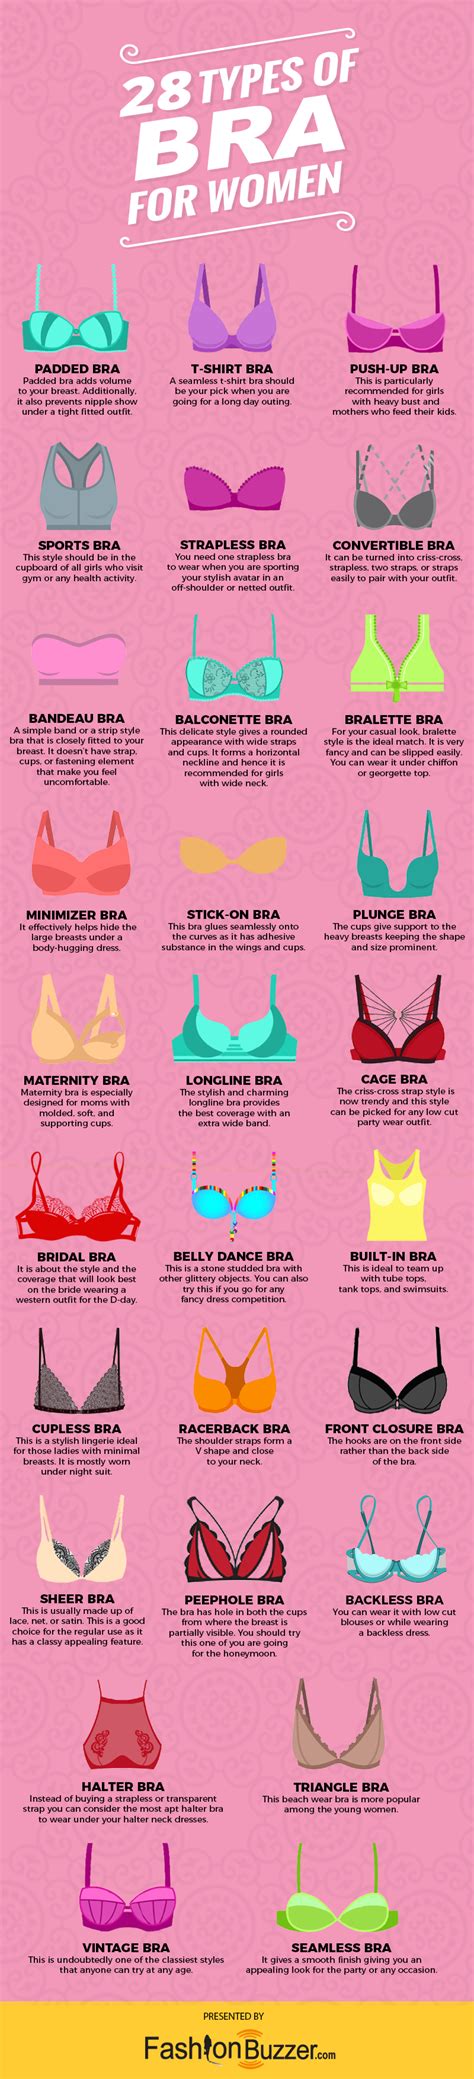 Different Type Of Bras Infographic Fashionbuzzer Com